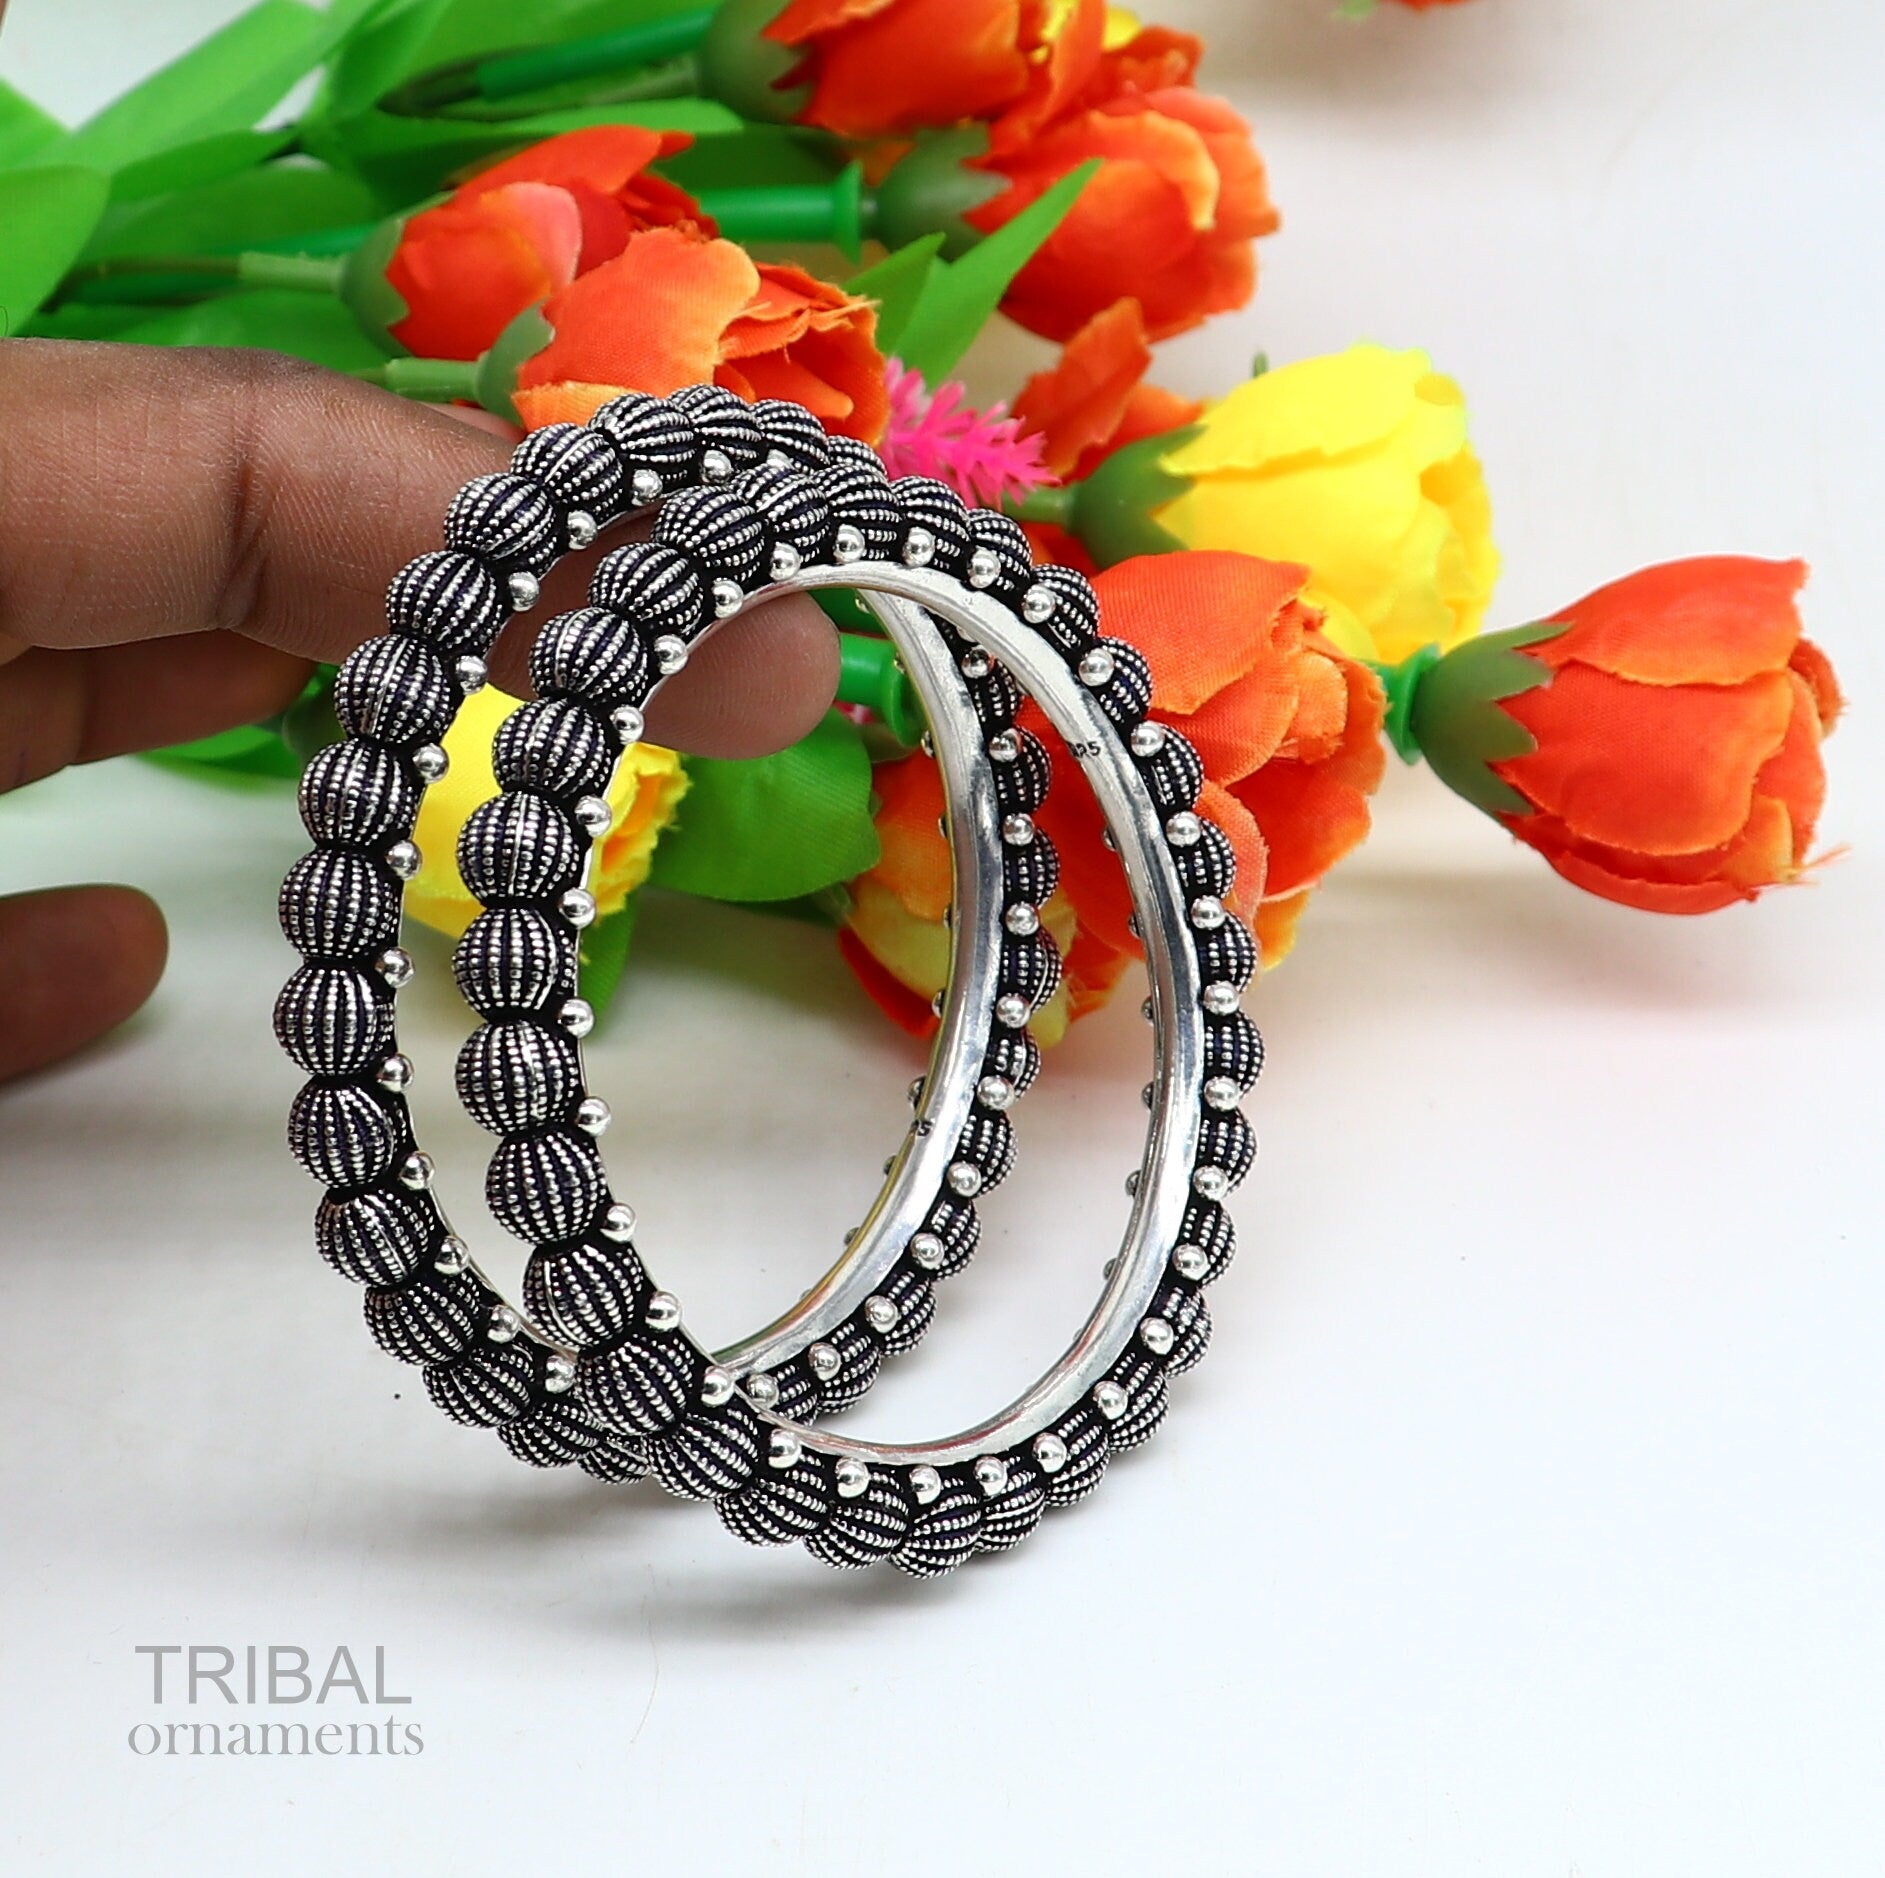 925 sterling silver handmade Indian vintage design bangle bracelet kada stunning stylish tribal brides jewelry gifting ethnic bangles ba121 - TRIBAL ORNAMENTS